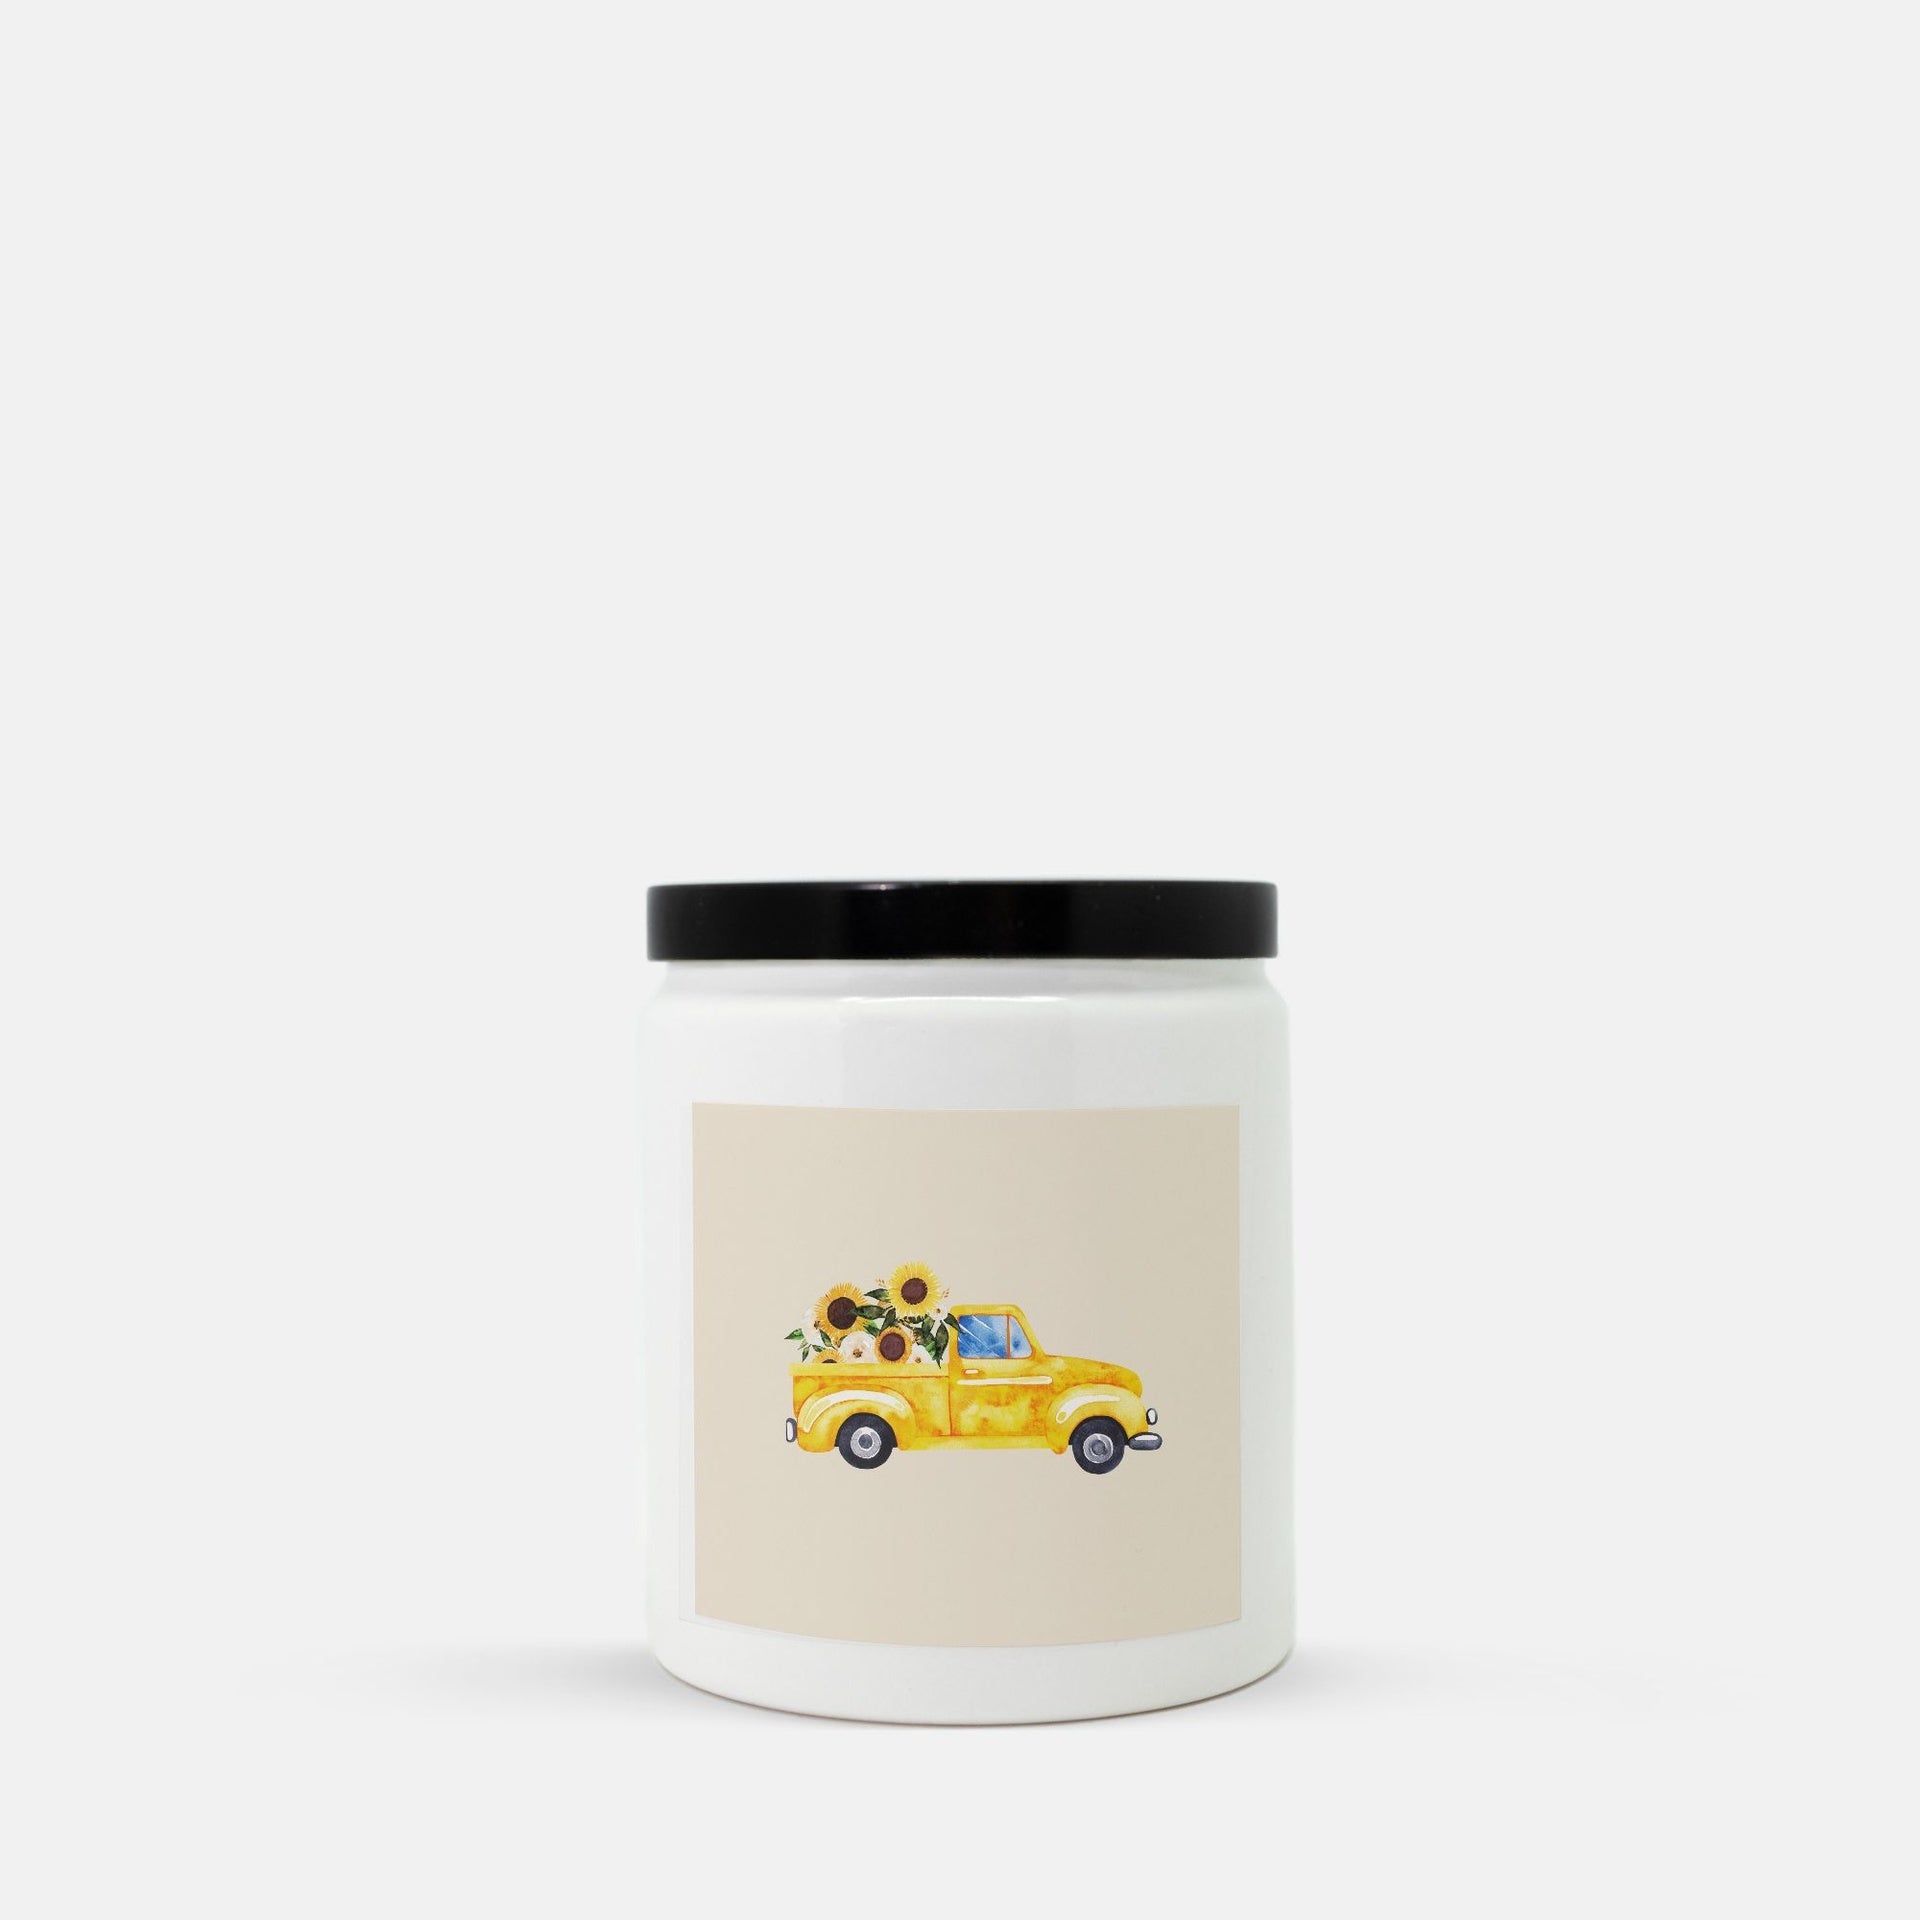 Lifestyle Details - Yellow Rustic Truck Ceramic Candle w Black Lid - Vanilla Bean